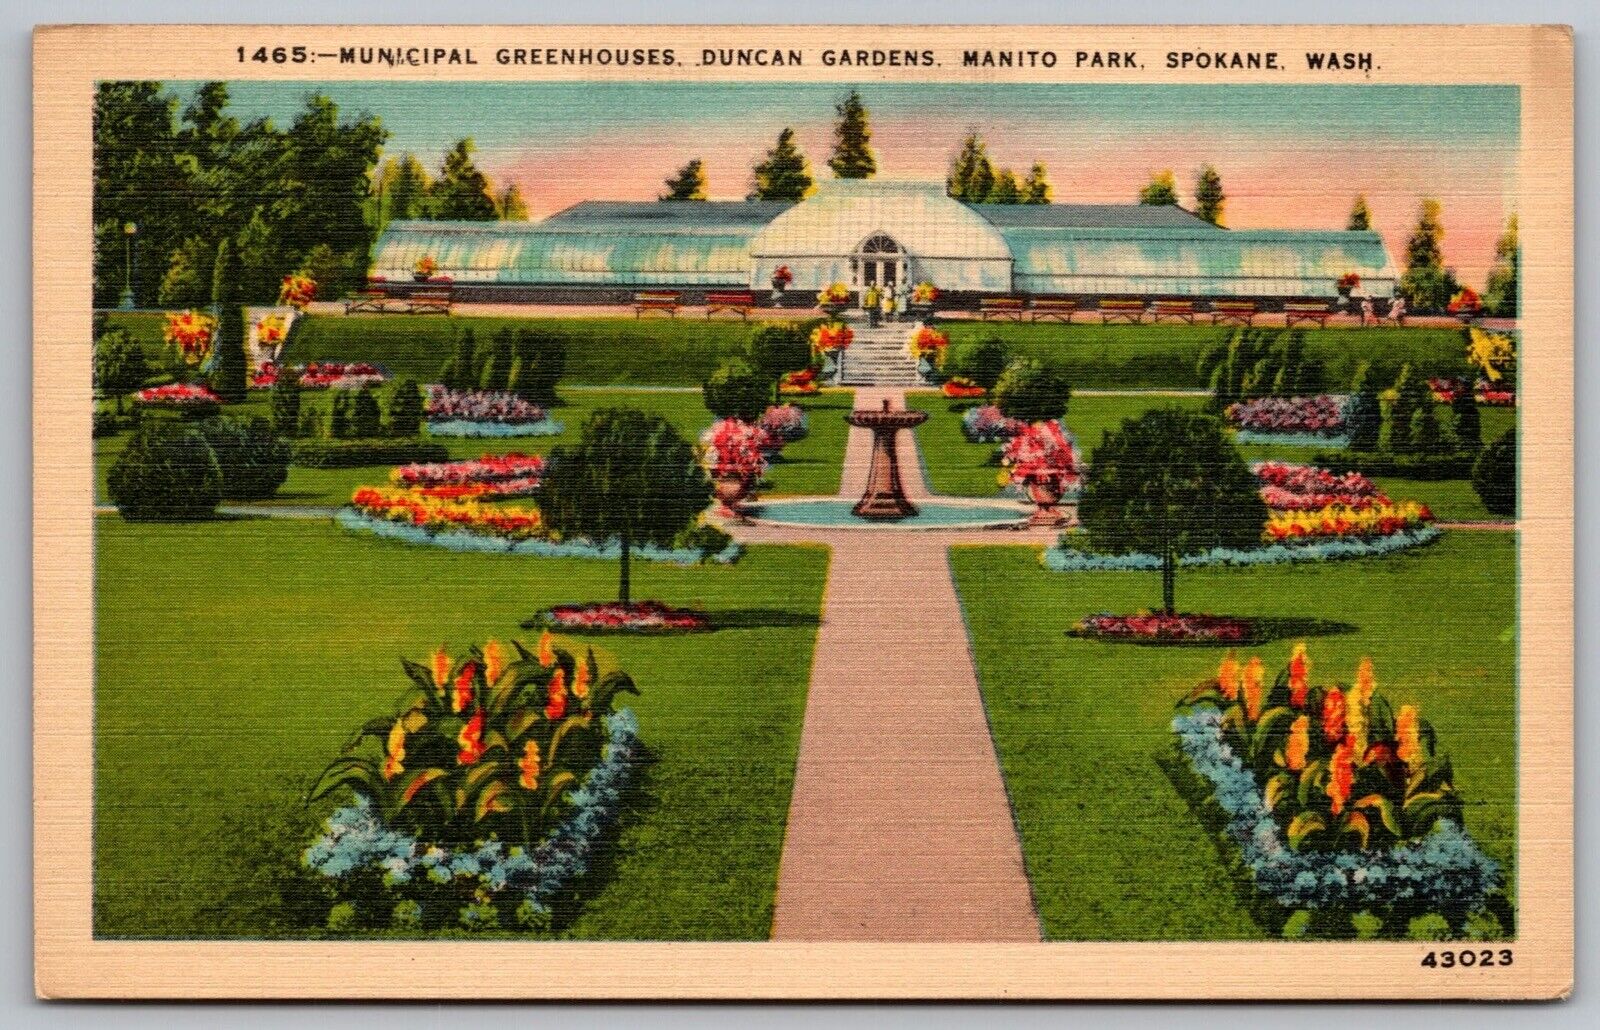 Washington Spokane Municipal Greenhouse Duncan Gardens Manito Park VTG Postcard